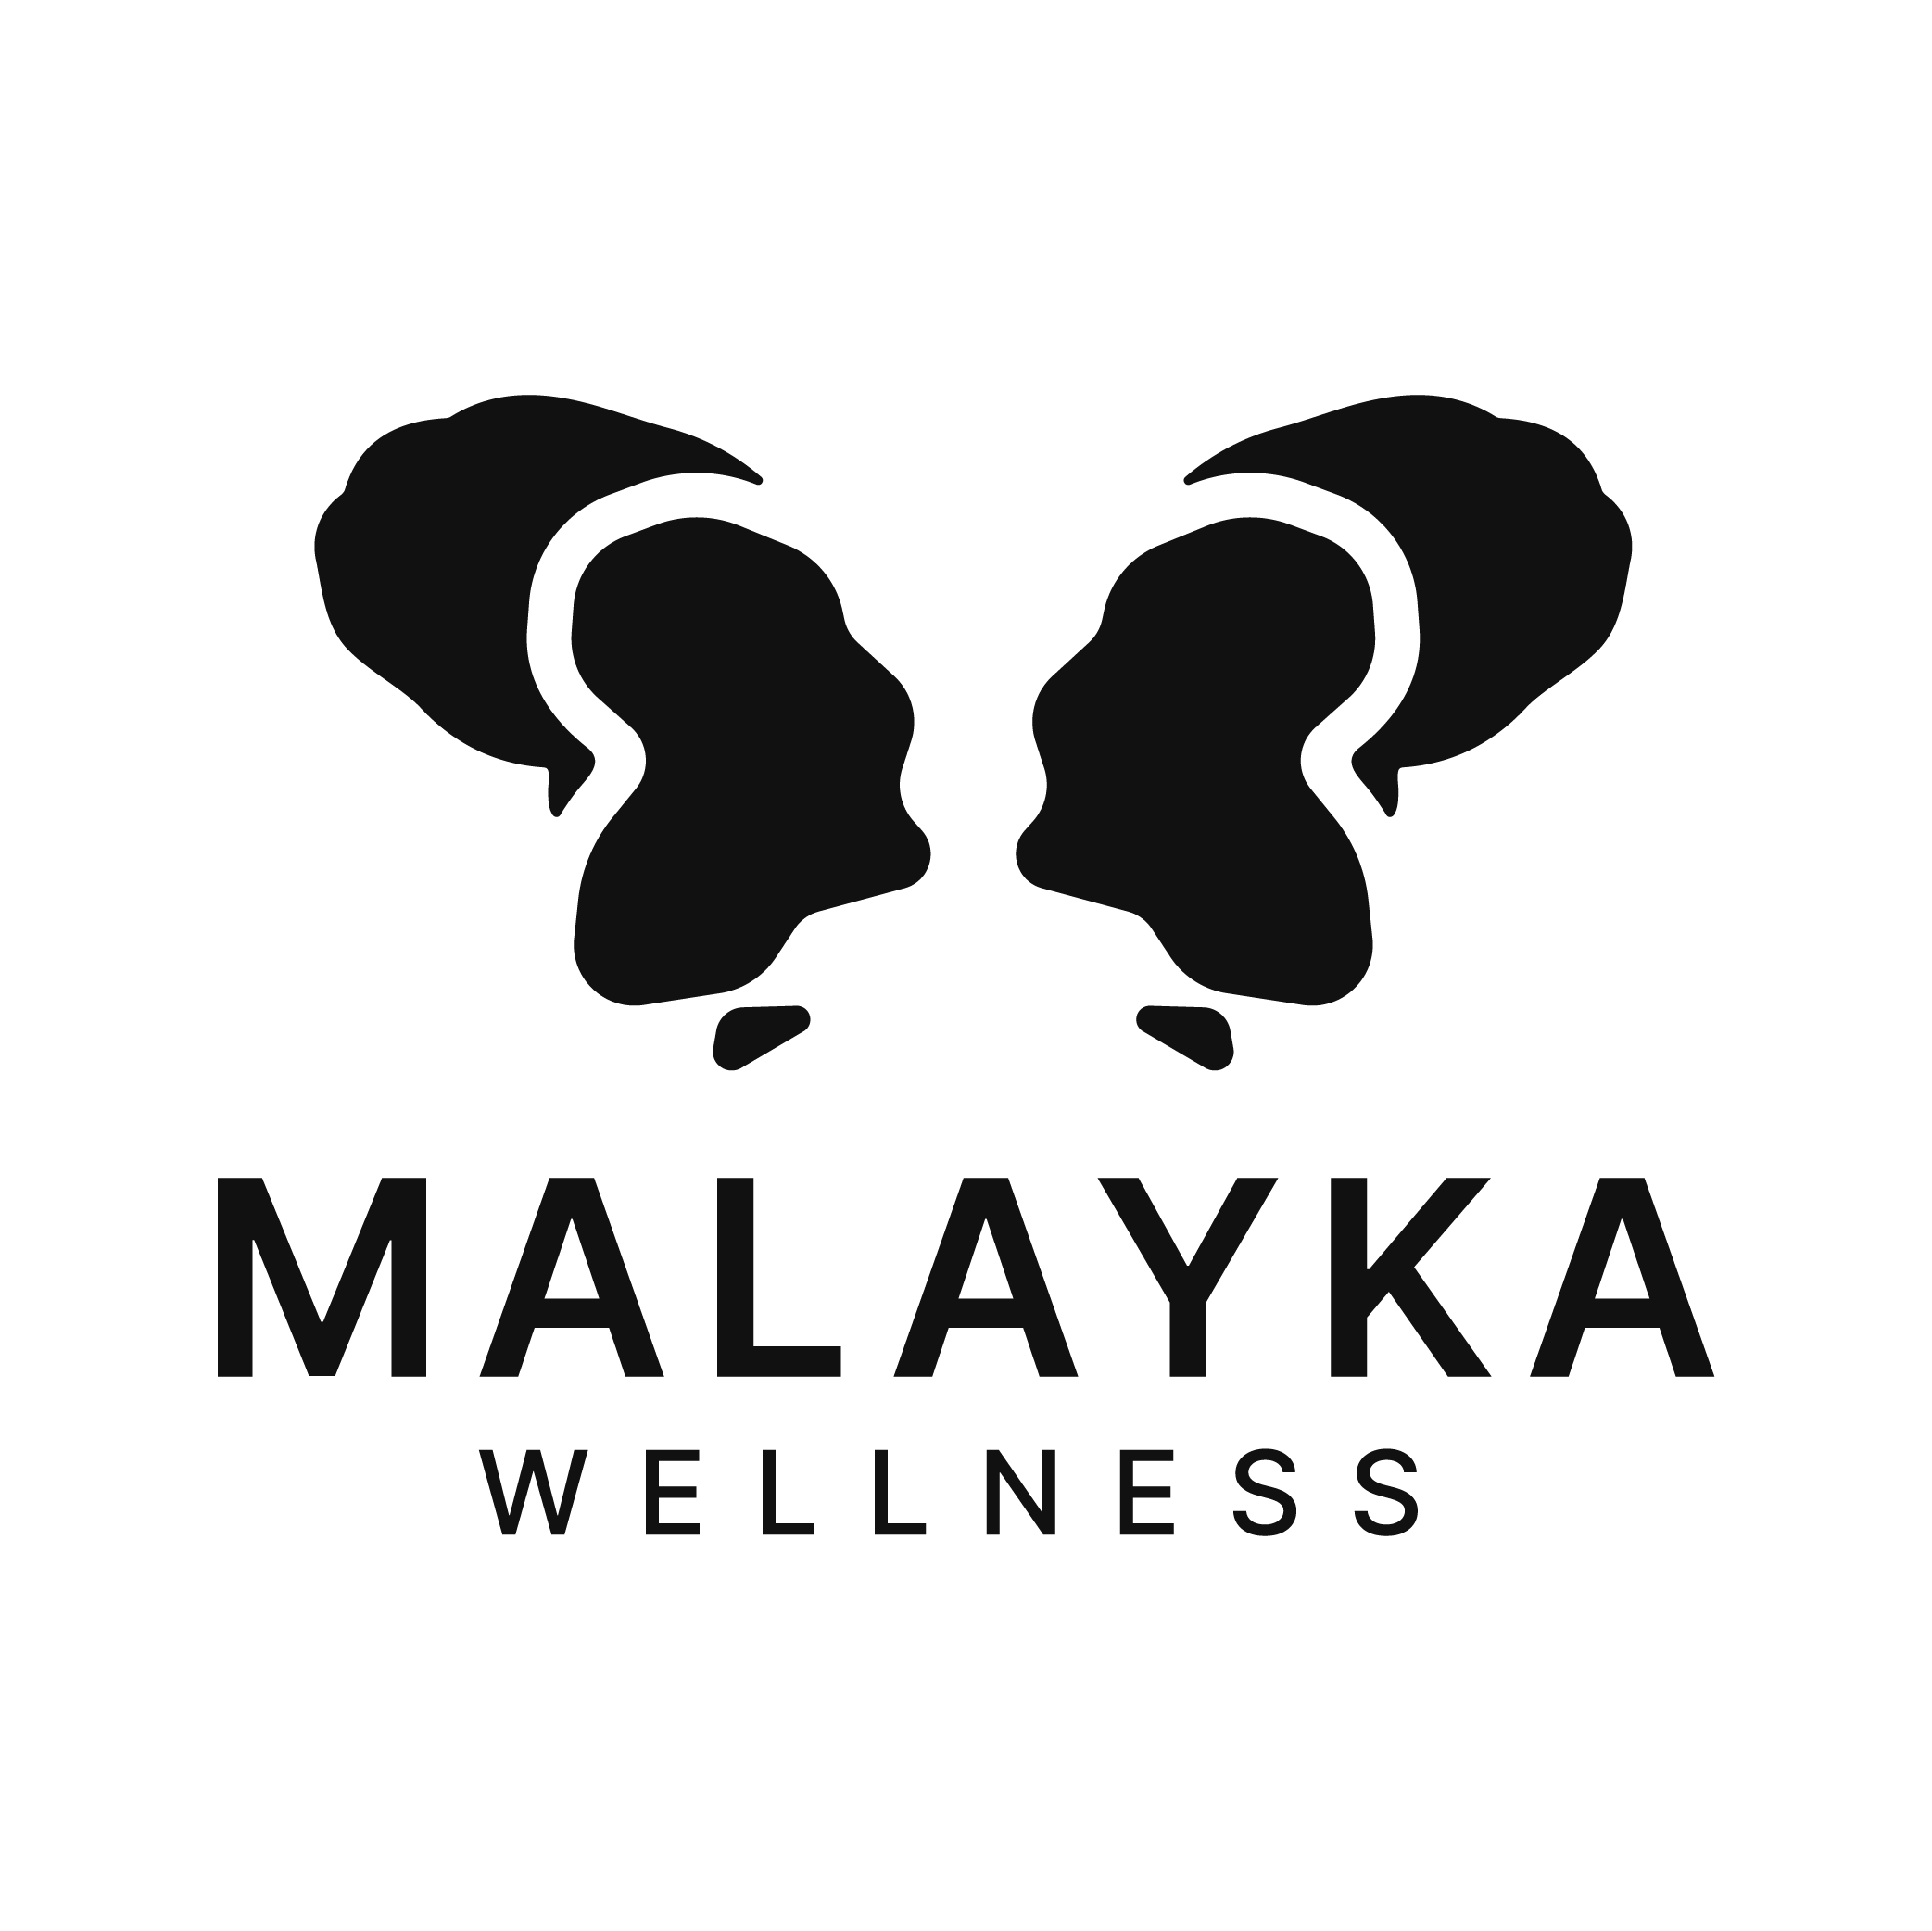 Malayka Wellness